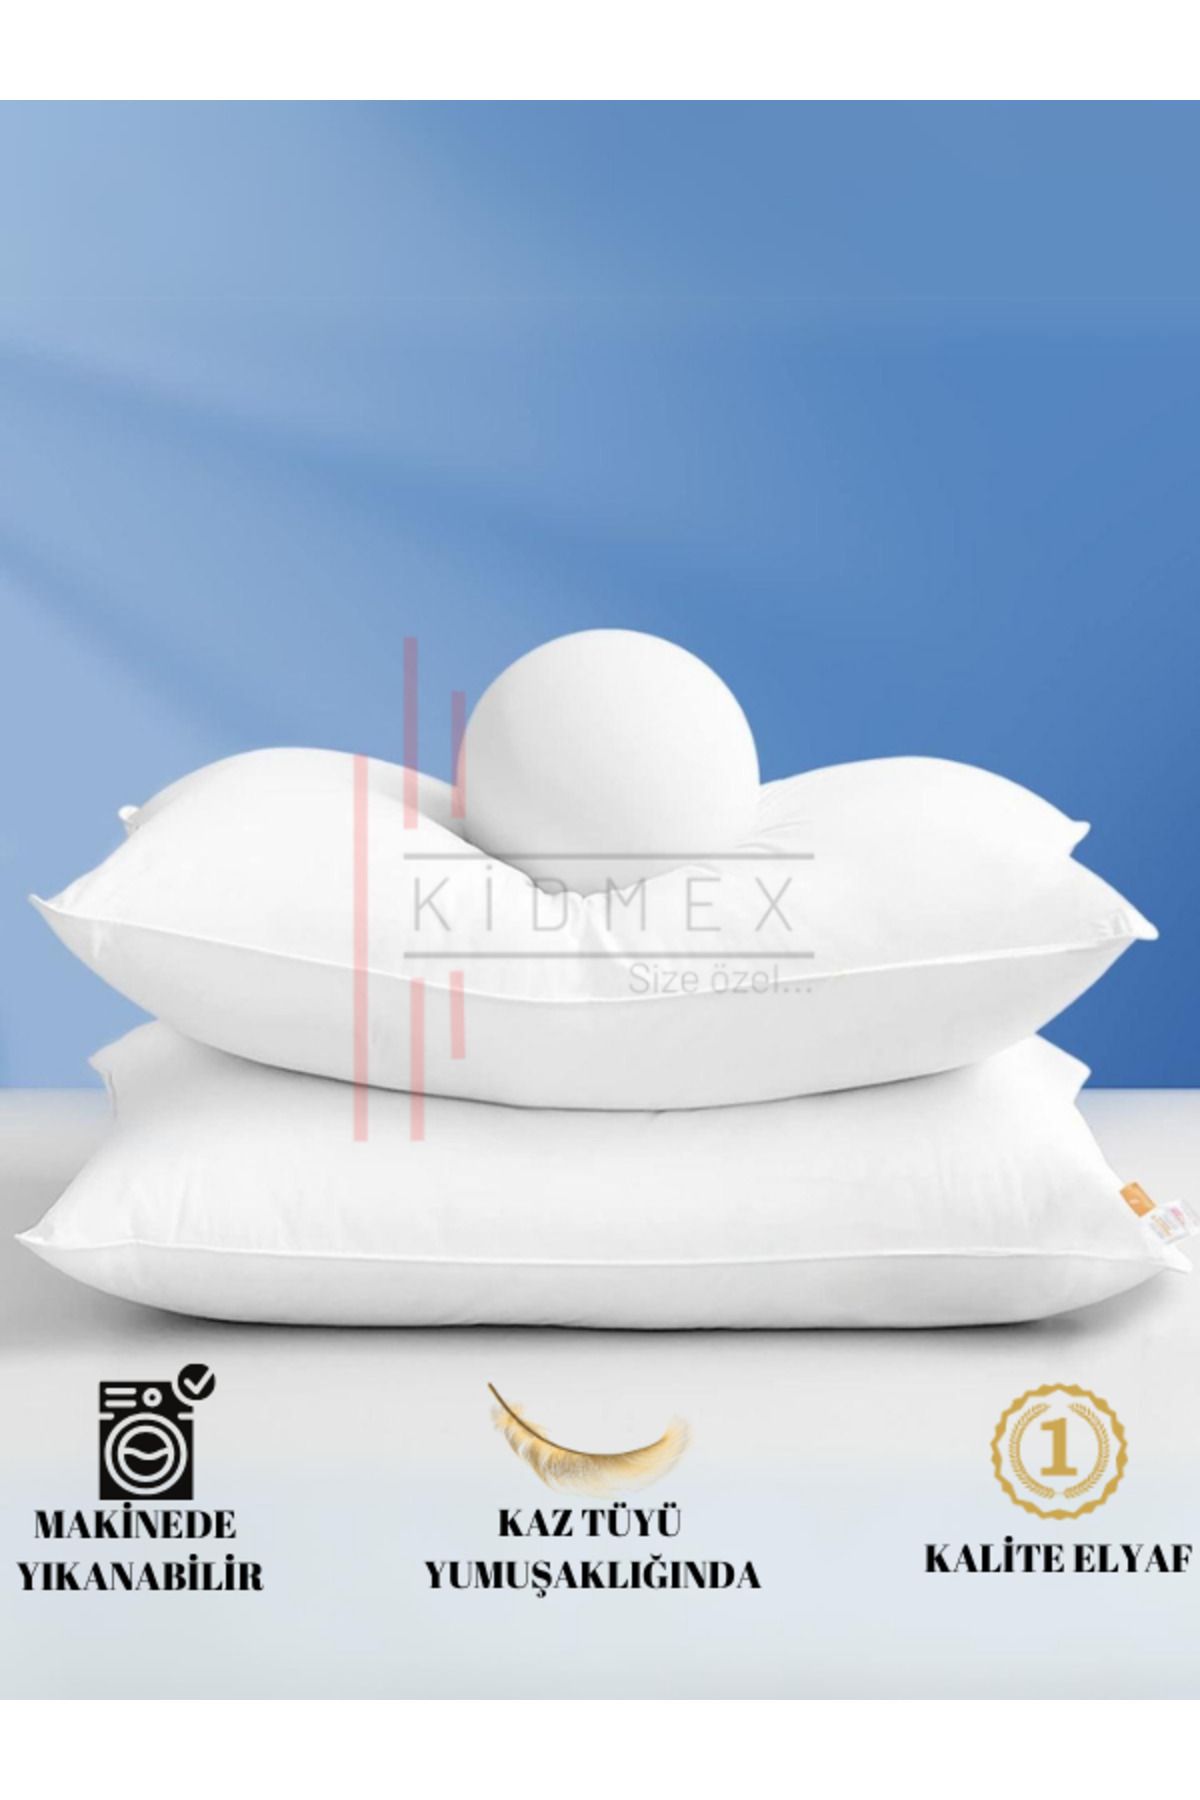 Kidmex 2 Adet Premium Ultra Rahat Yüksek Yastık (1 ADET 900GR)